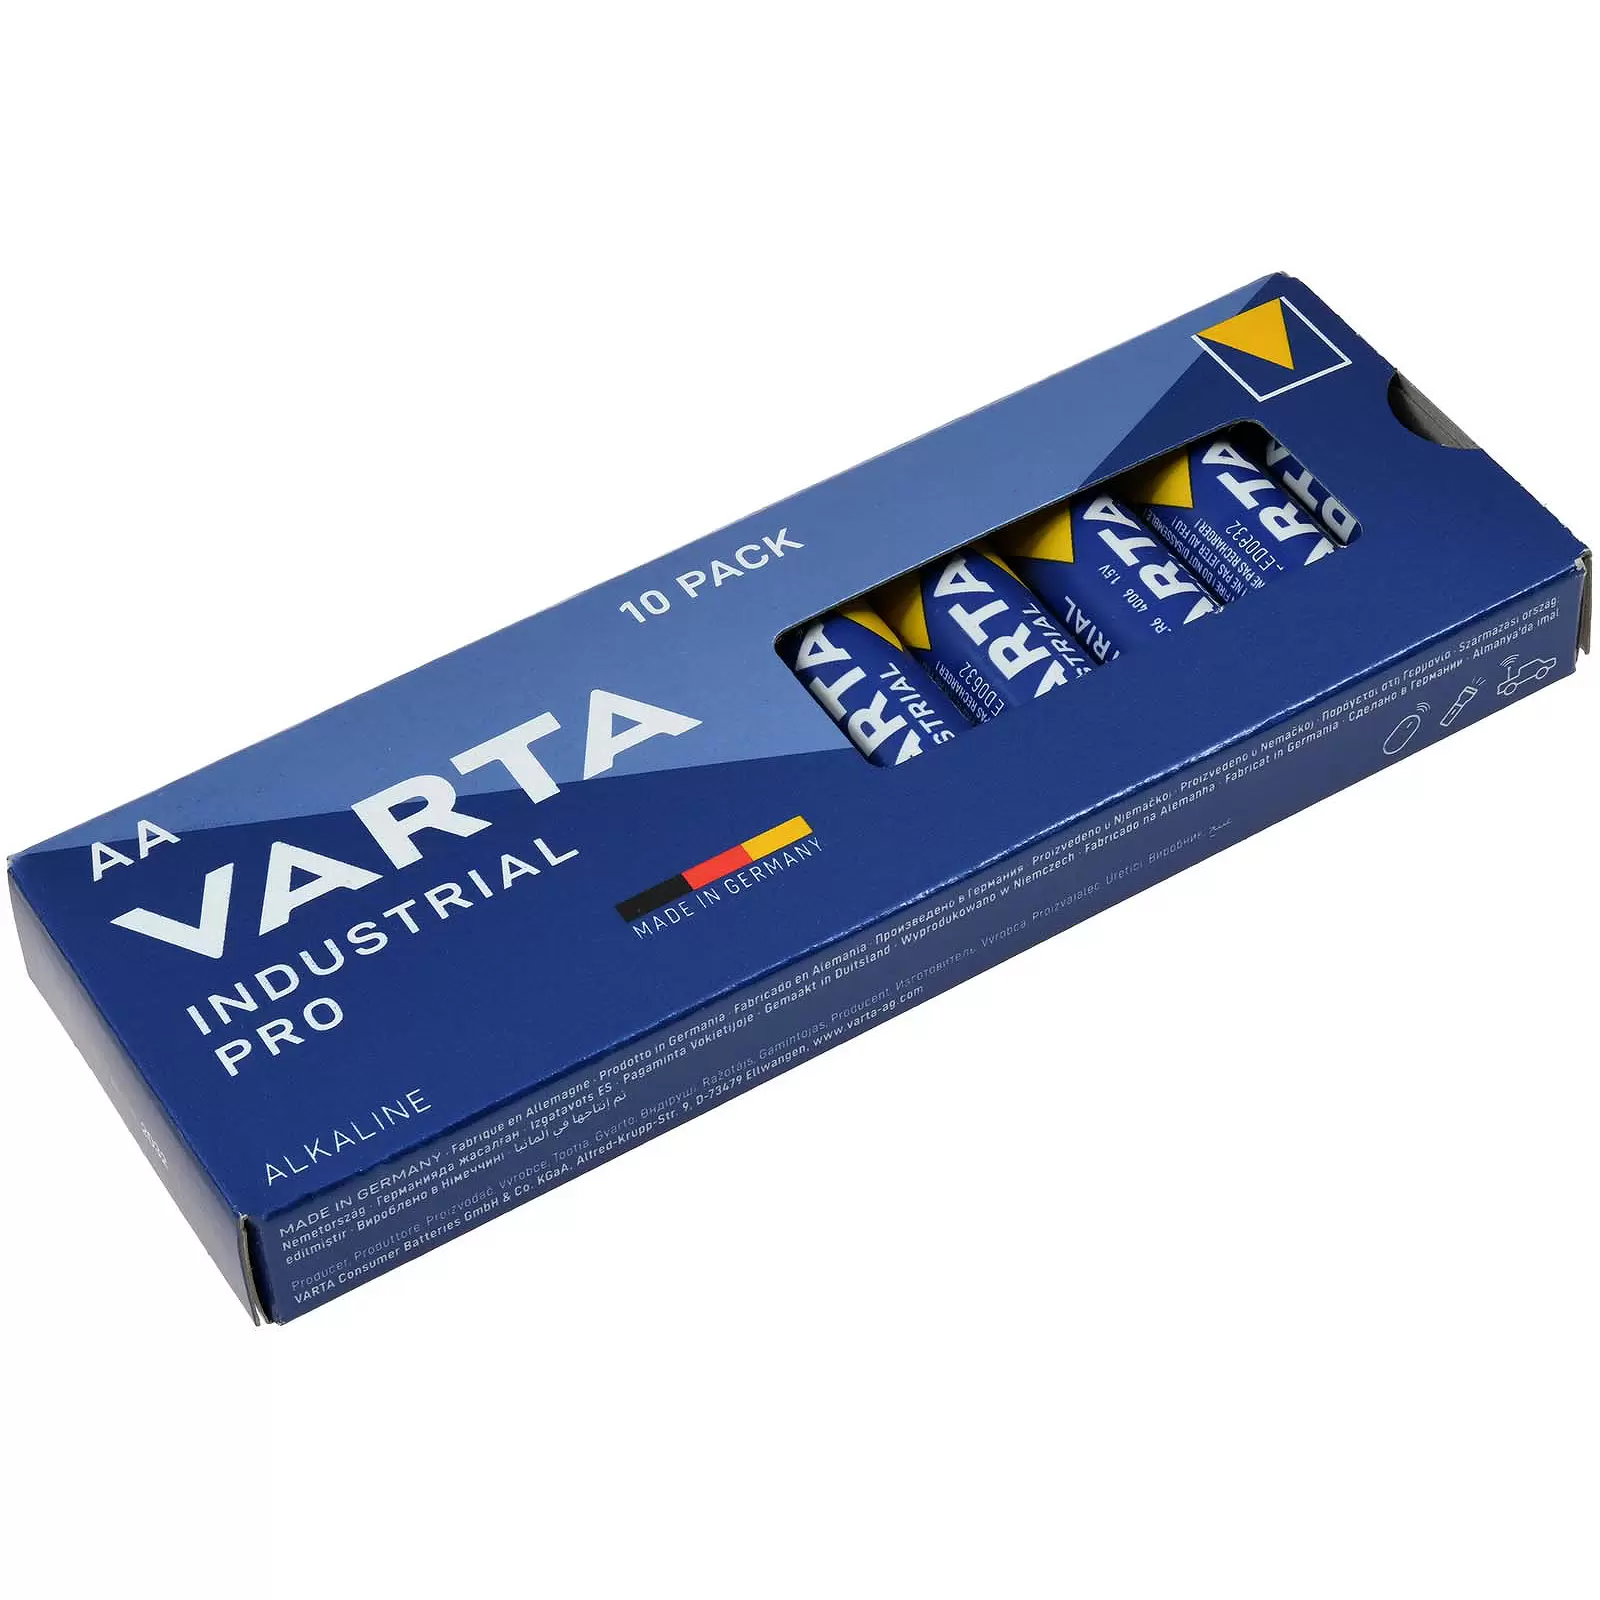 Batterie Varta 4006 Industrial Mignon LR06 AA 10er Packung